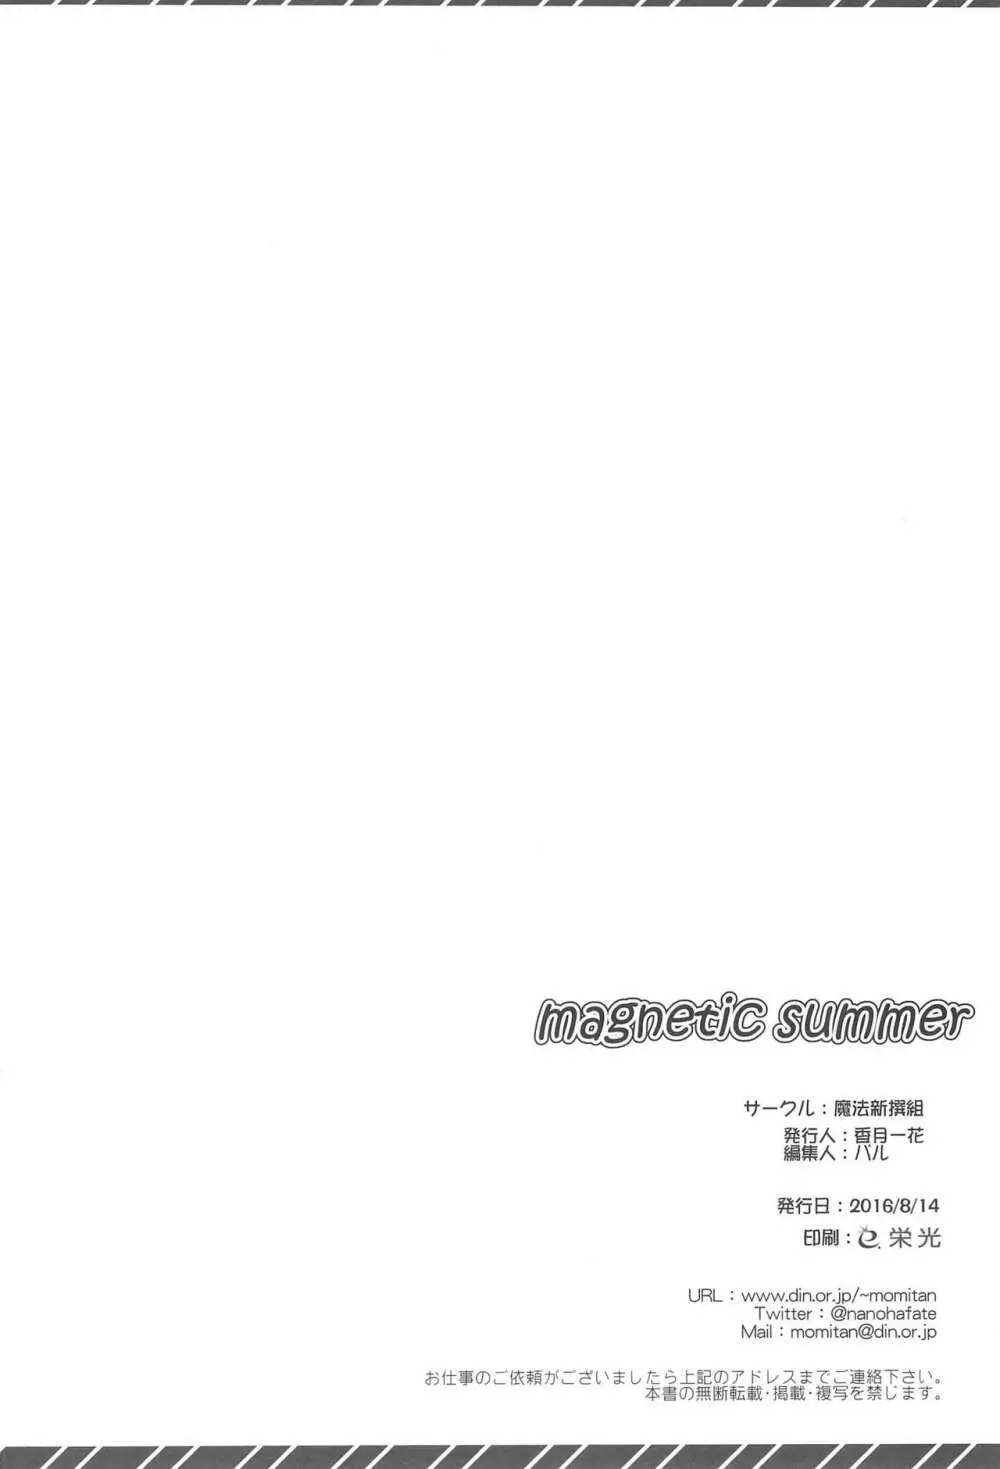 magnetic summer 40ページ